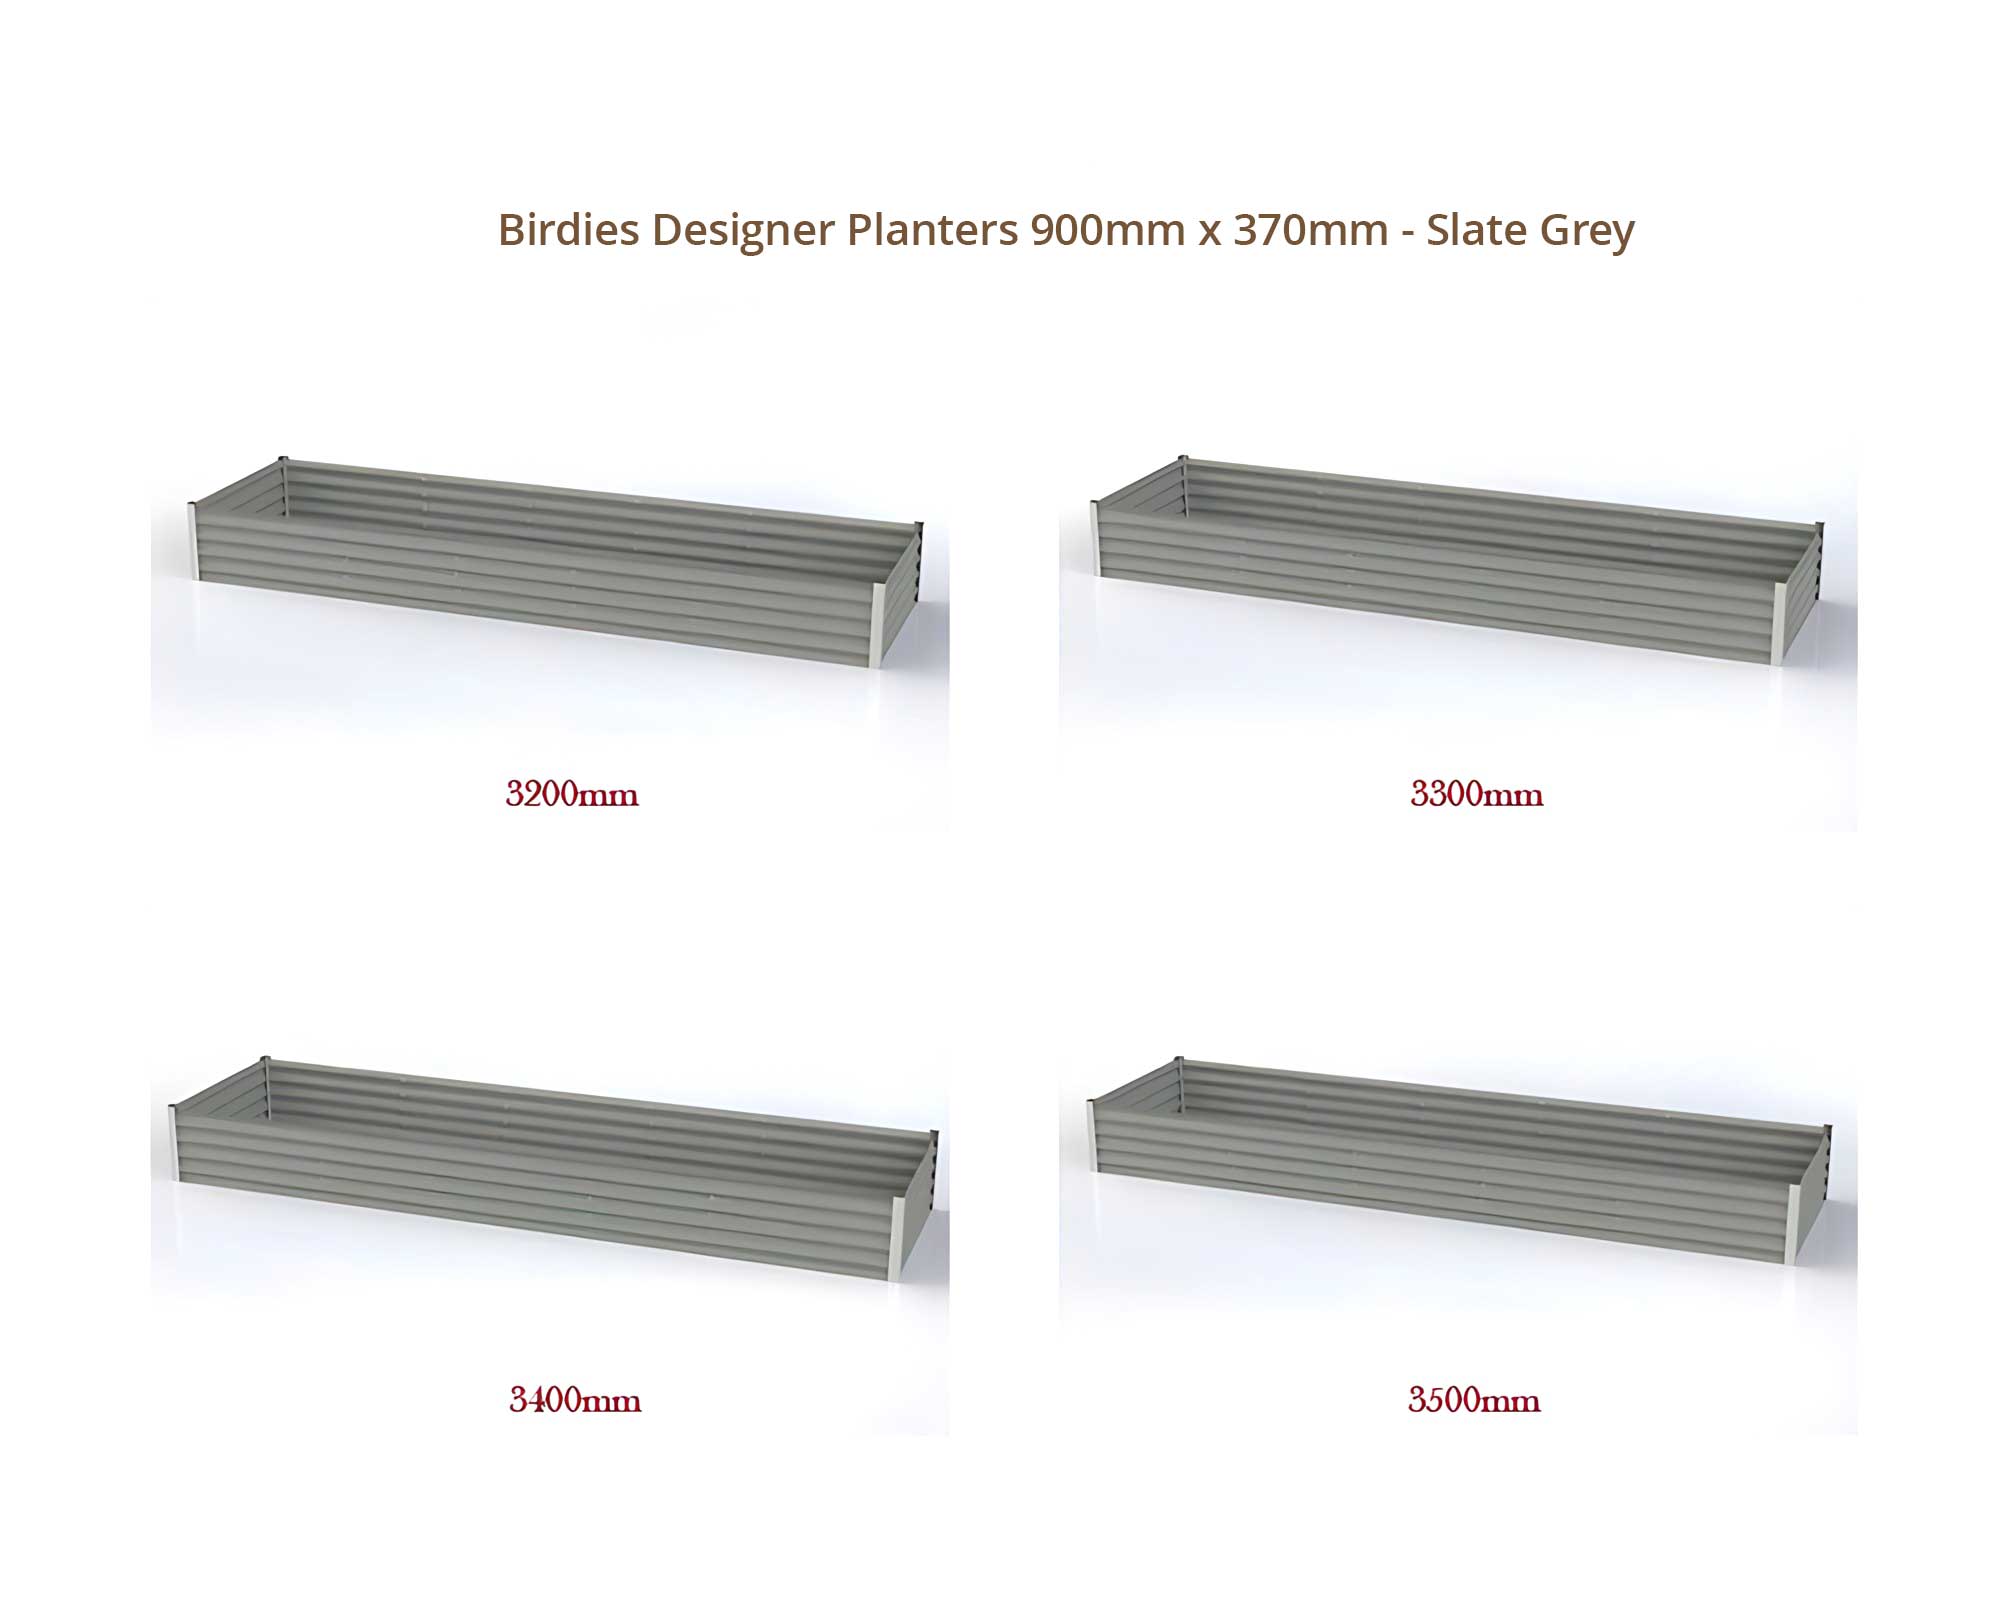 Birdies Designer Planters - 900mm Wide x 370mm High - Slate Grey